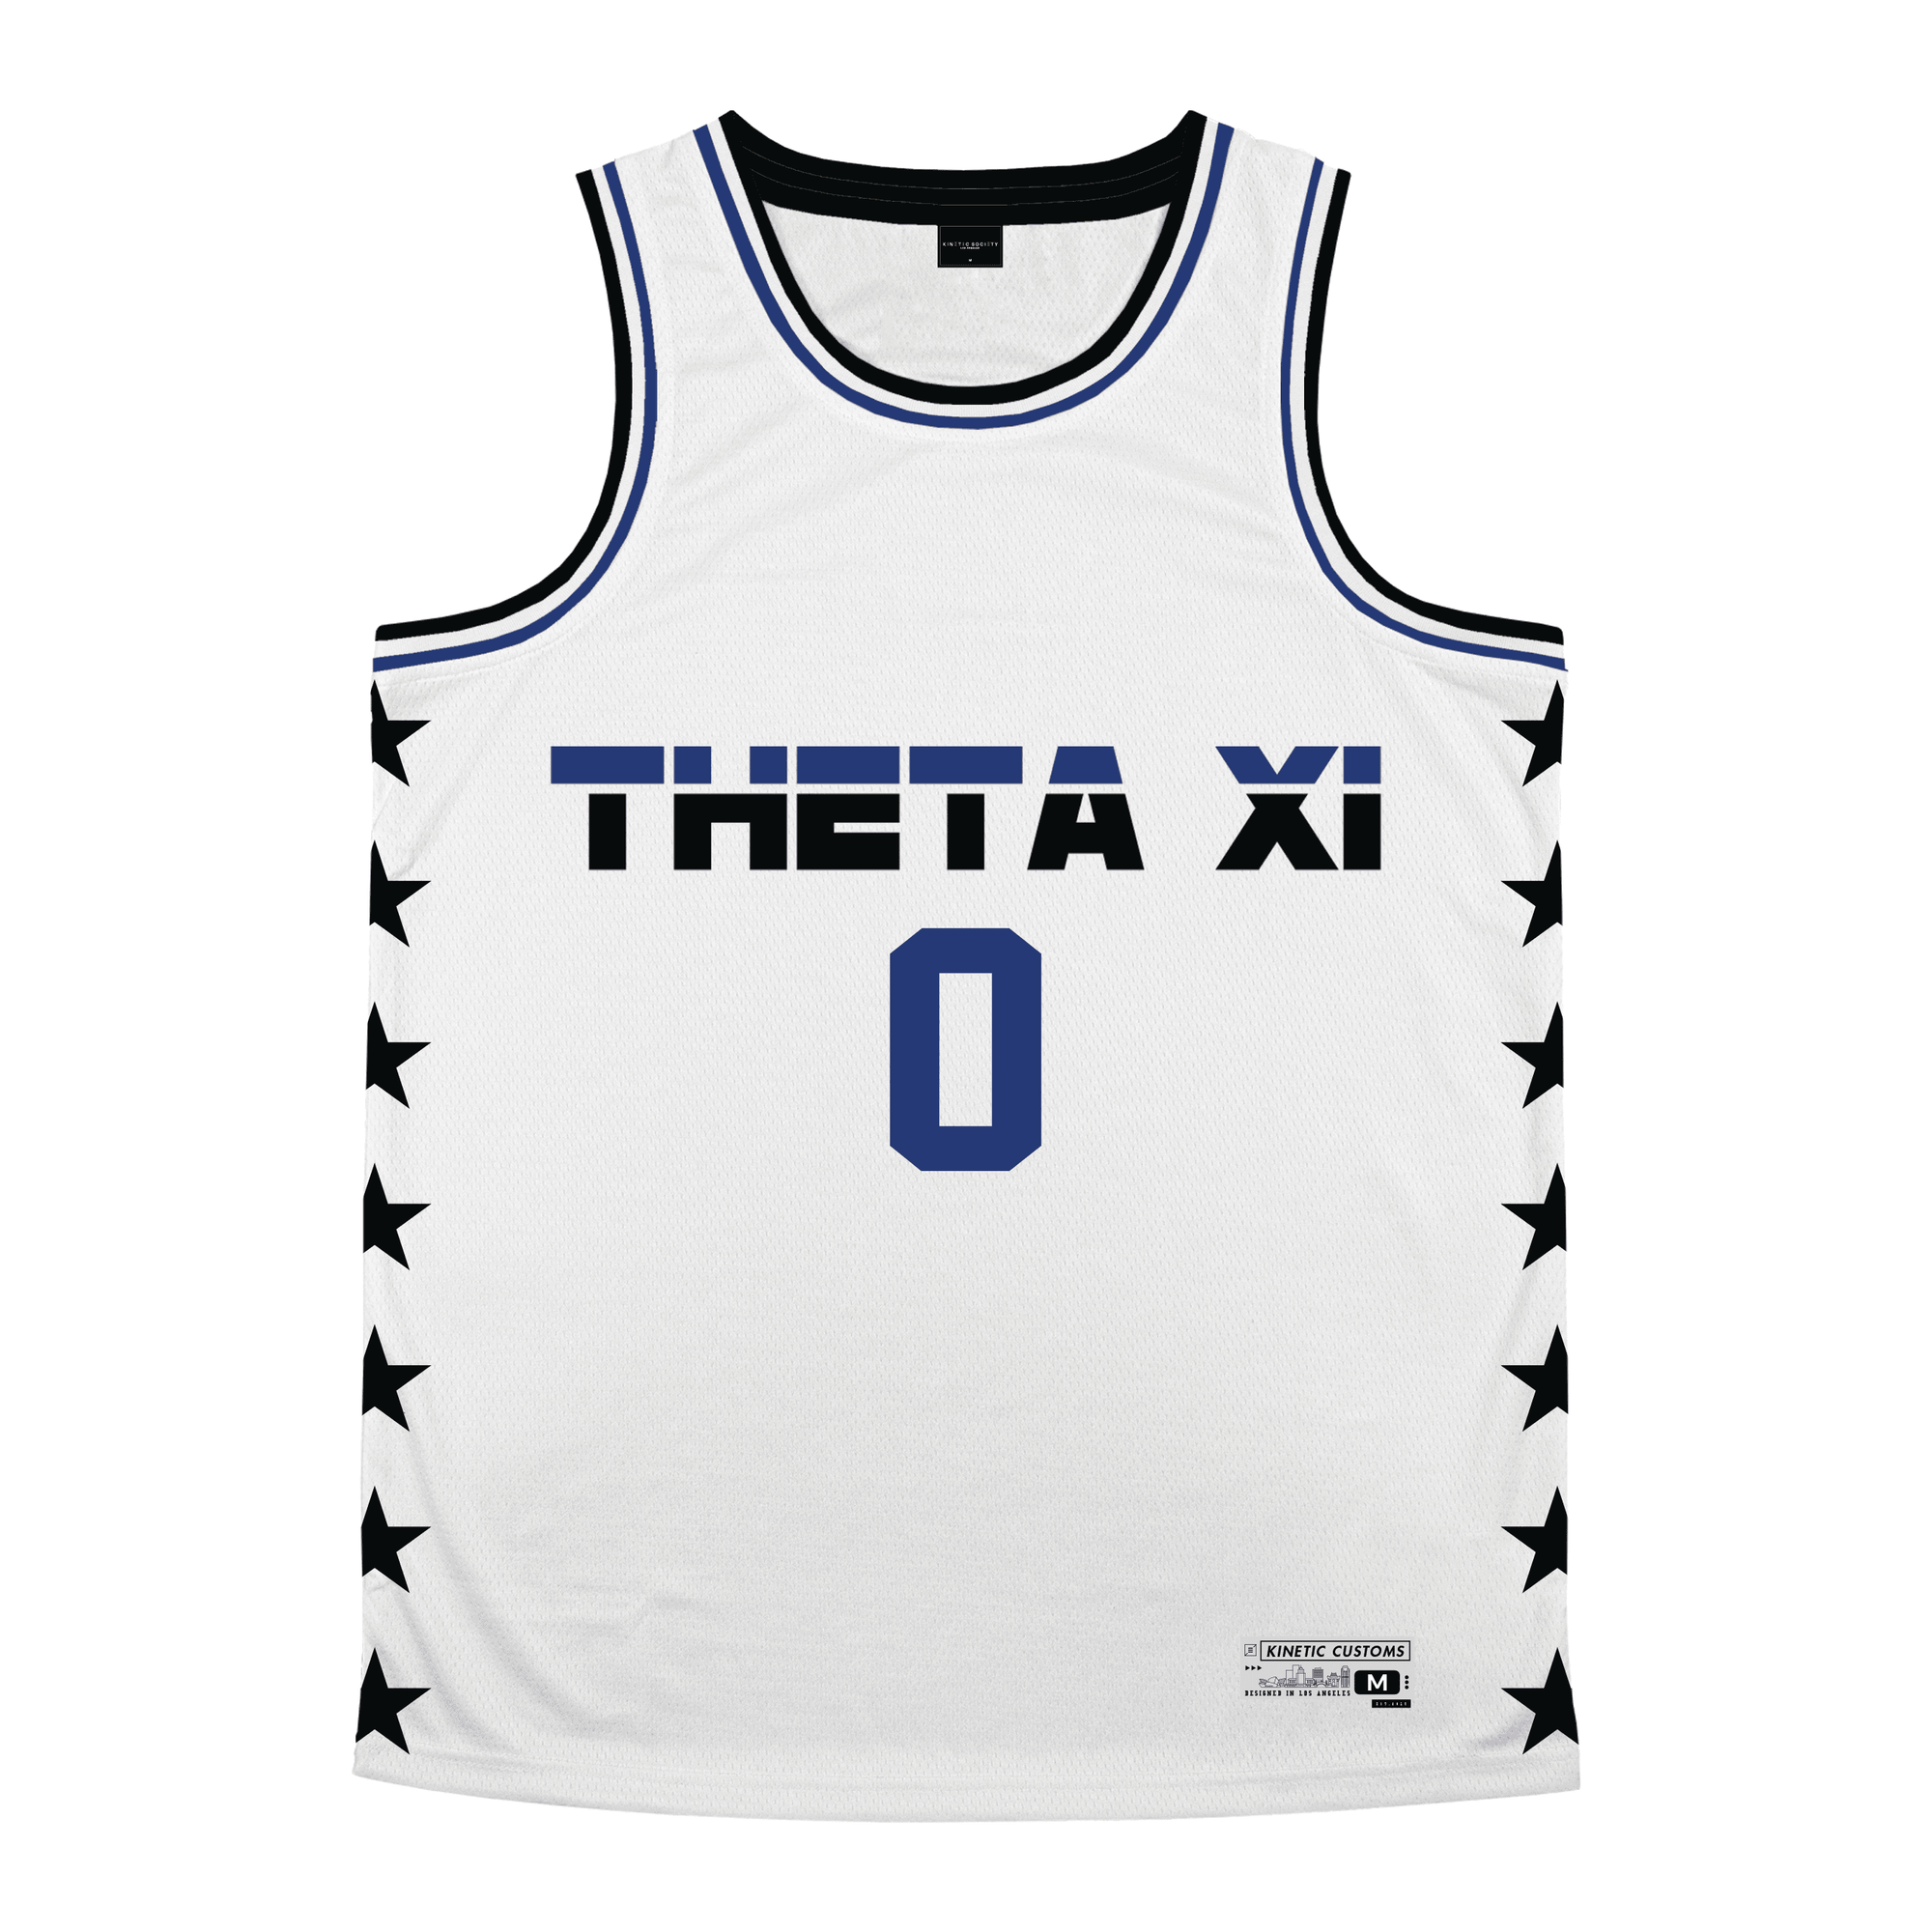 Theta Xi - Black Star Basketball Jersey